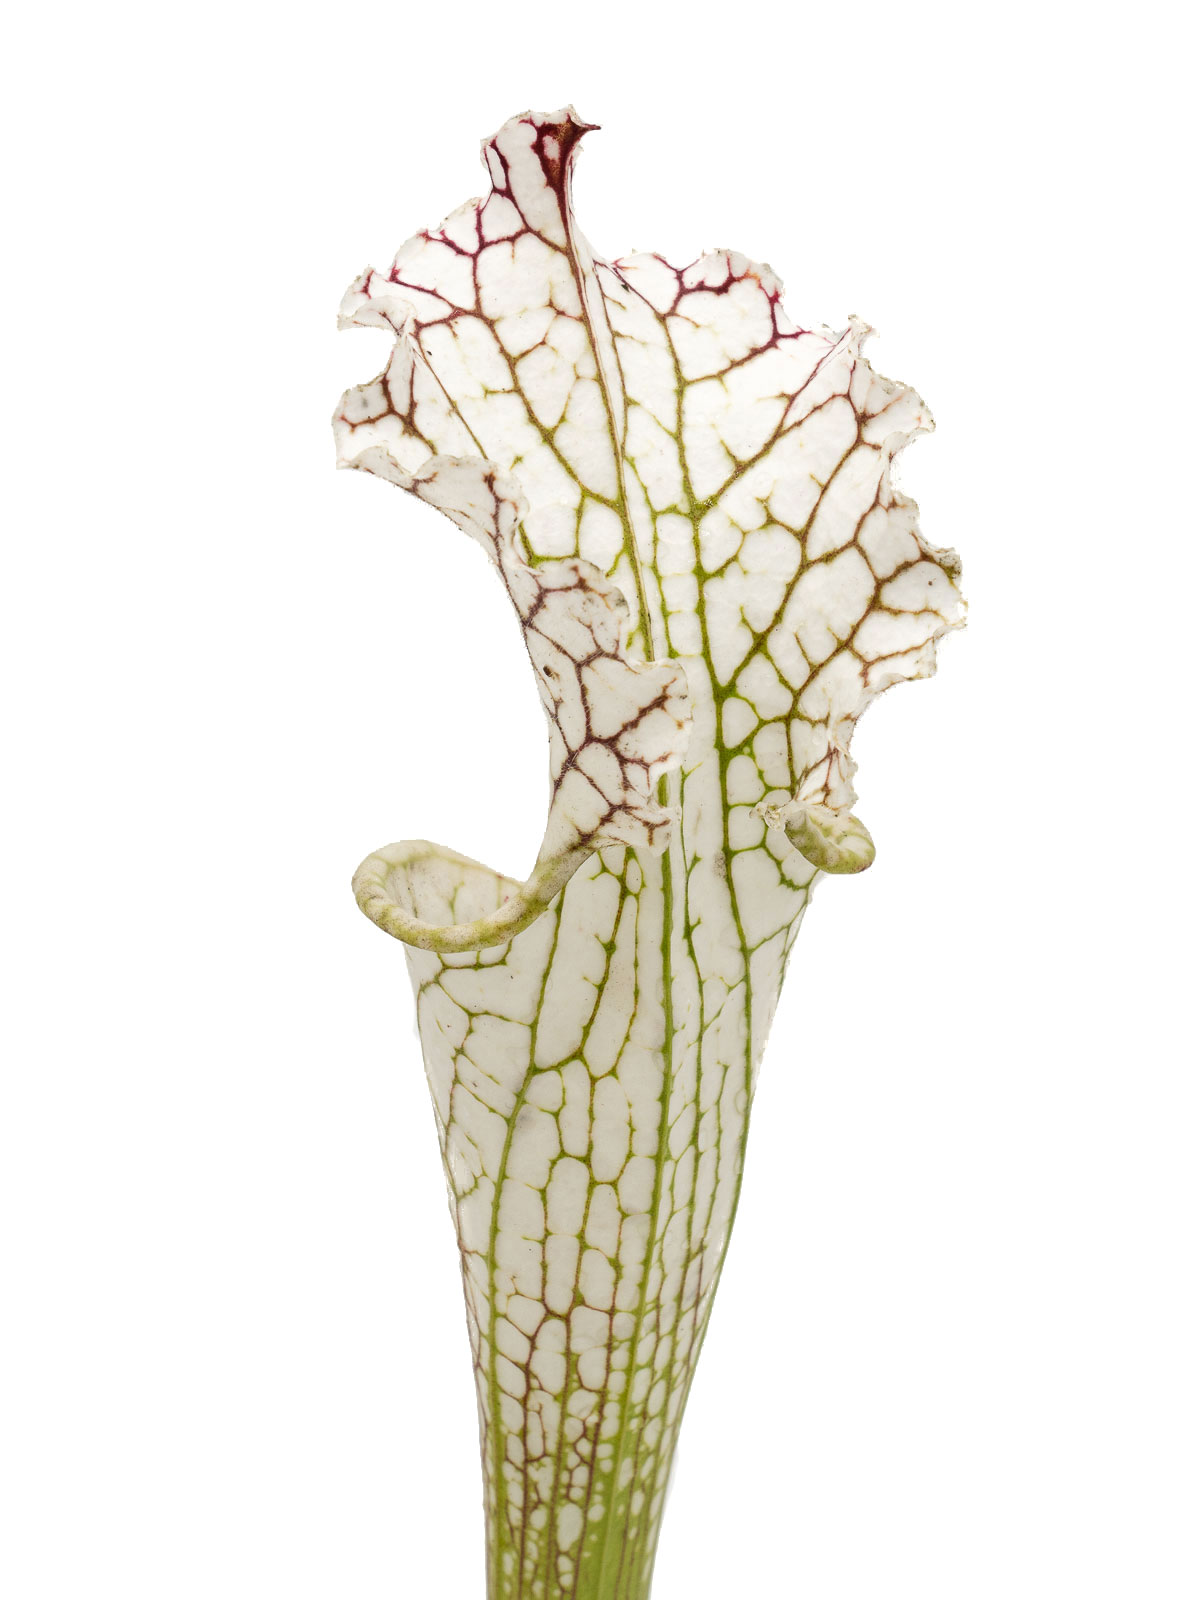 Sarracenia leucophylla - MK L15, Citronelle, Mobile County, Alabama